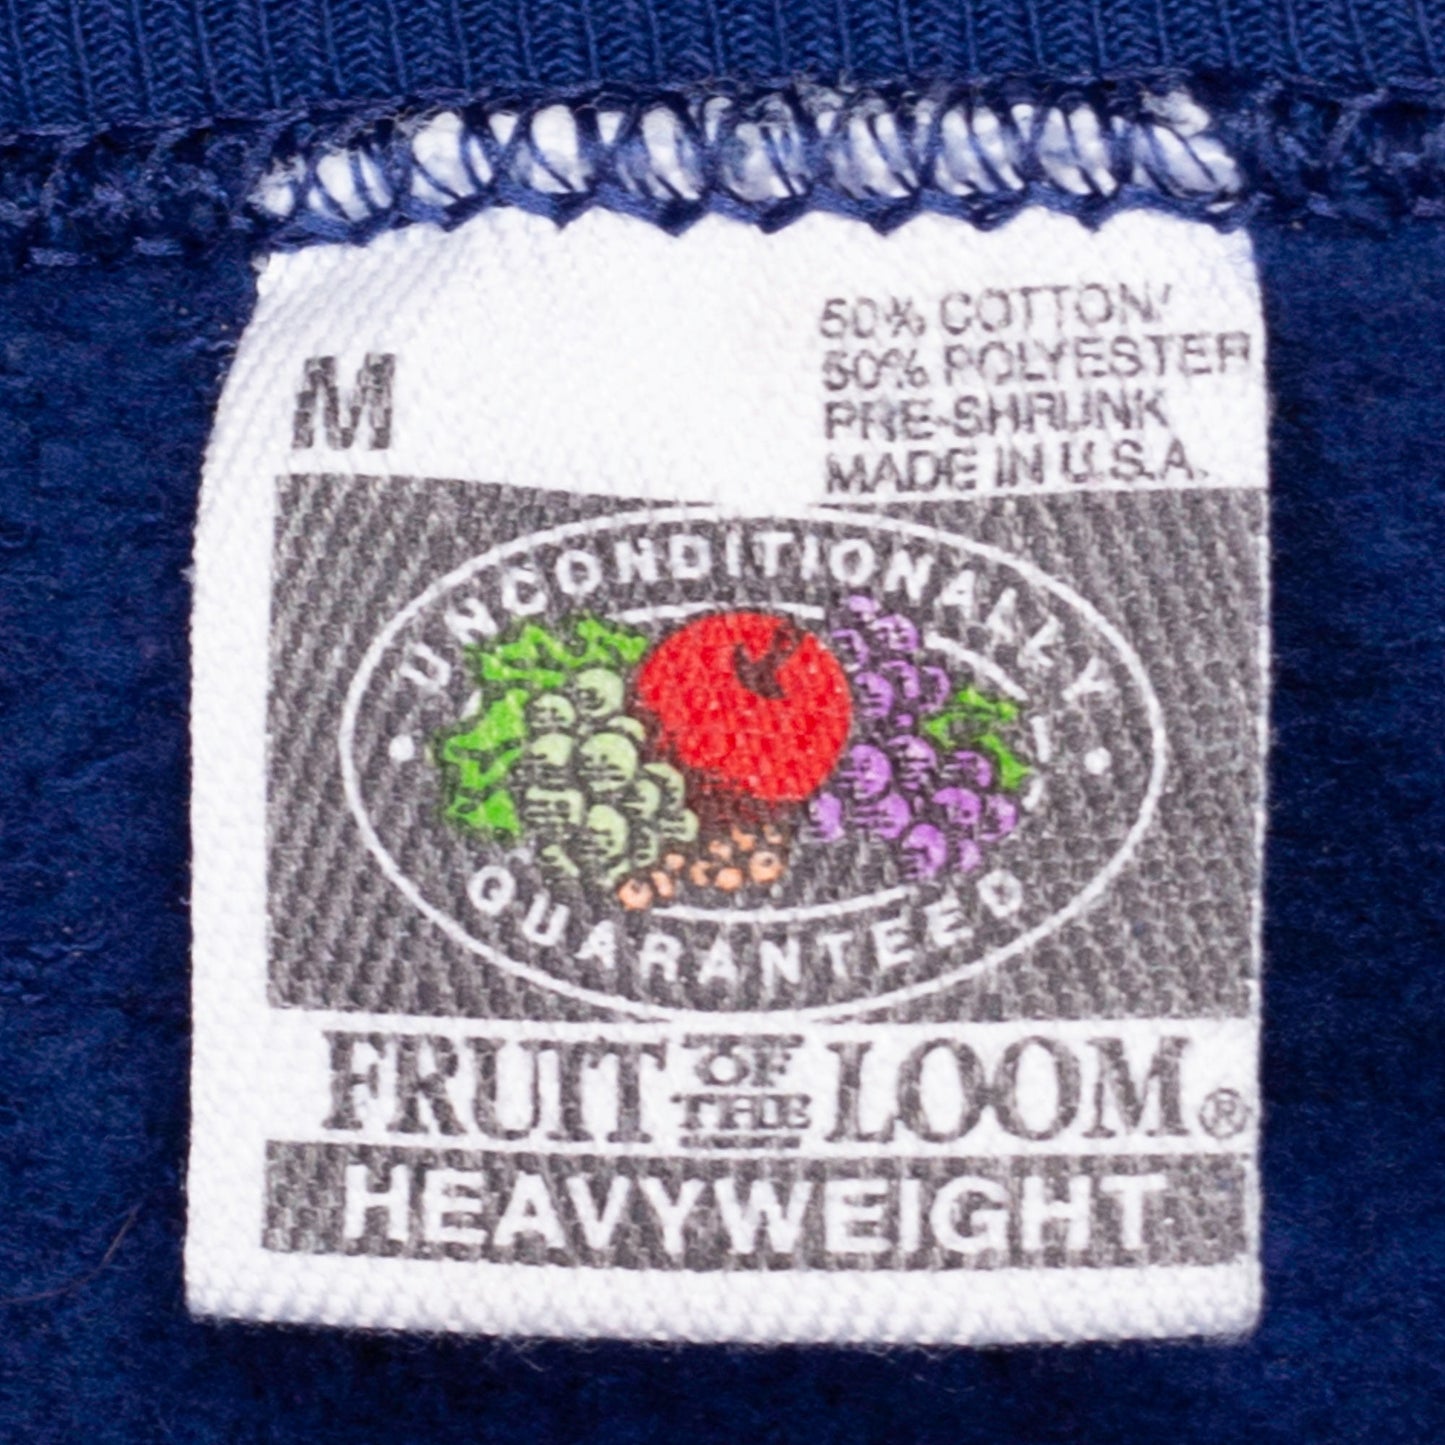 90s Dark Blue Crewneck Sweatshirt - Men's Medium | Vintage Fruit Of The Loom Unisex Plain Pullover